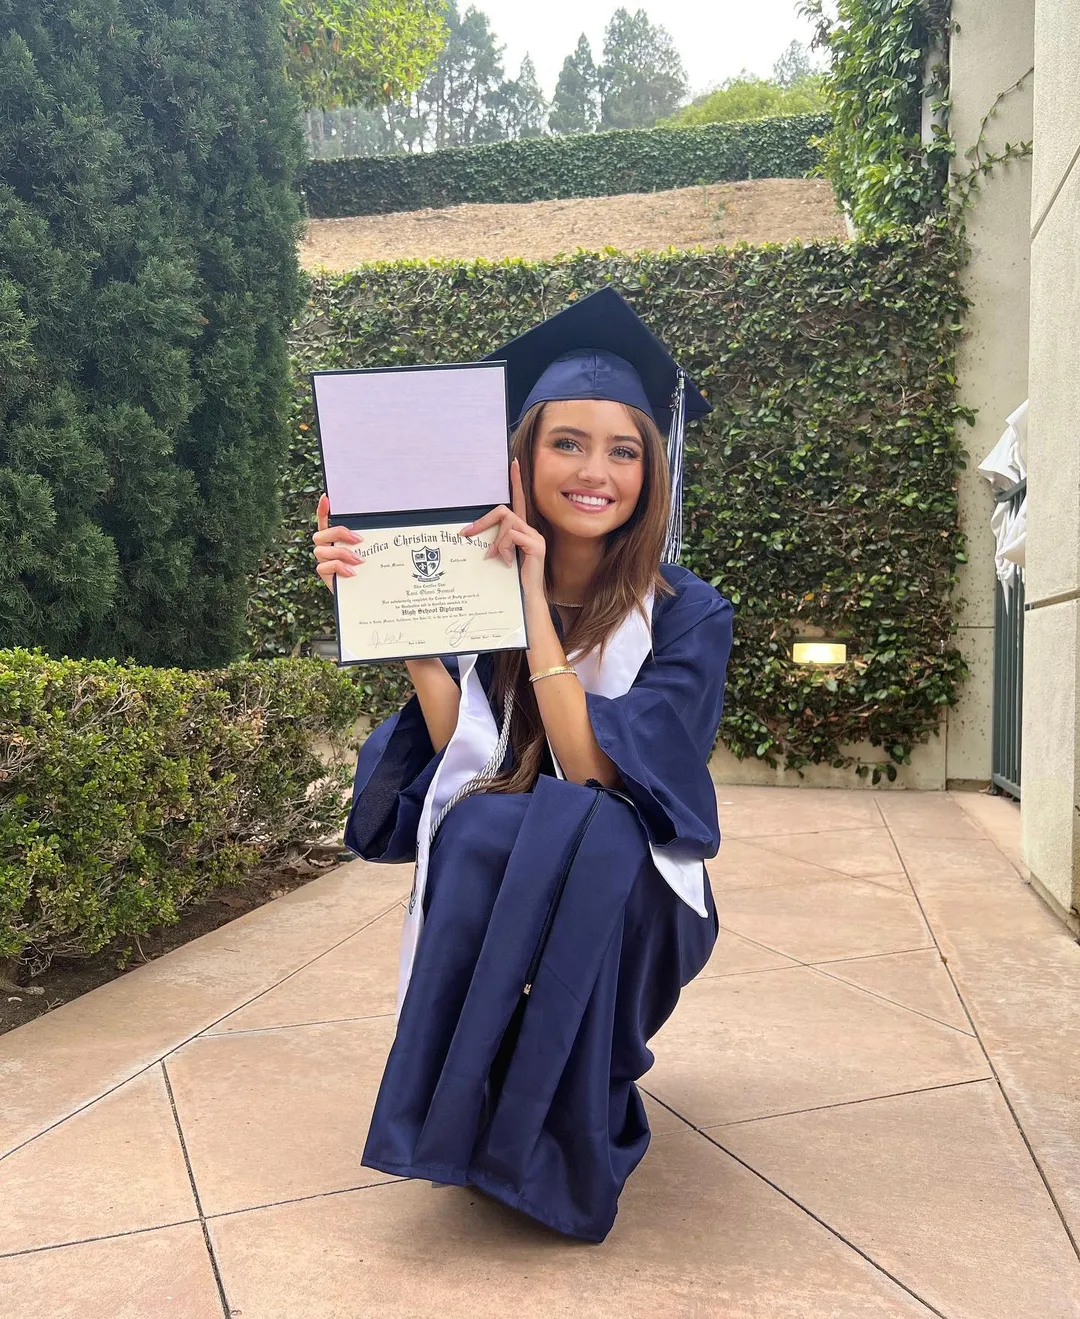 Leni Klum's picture after her high school graduation